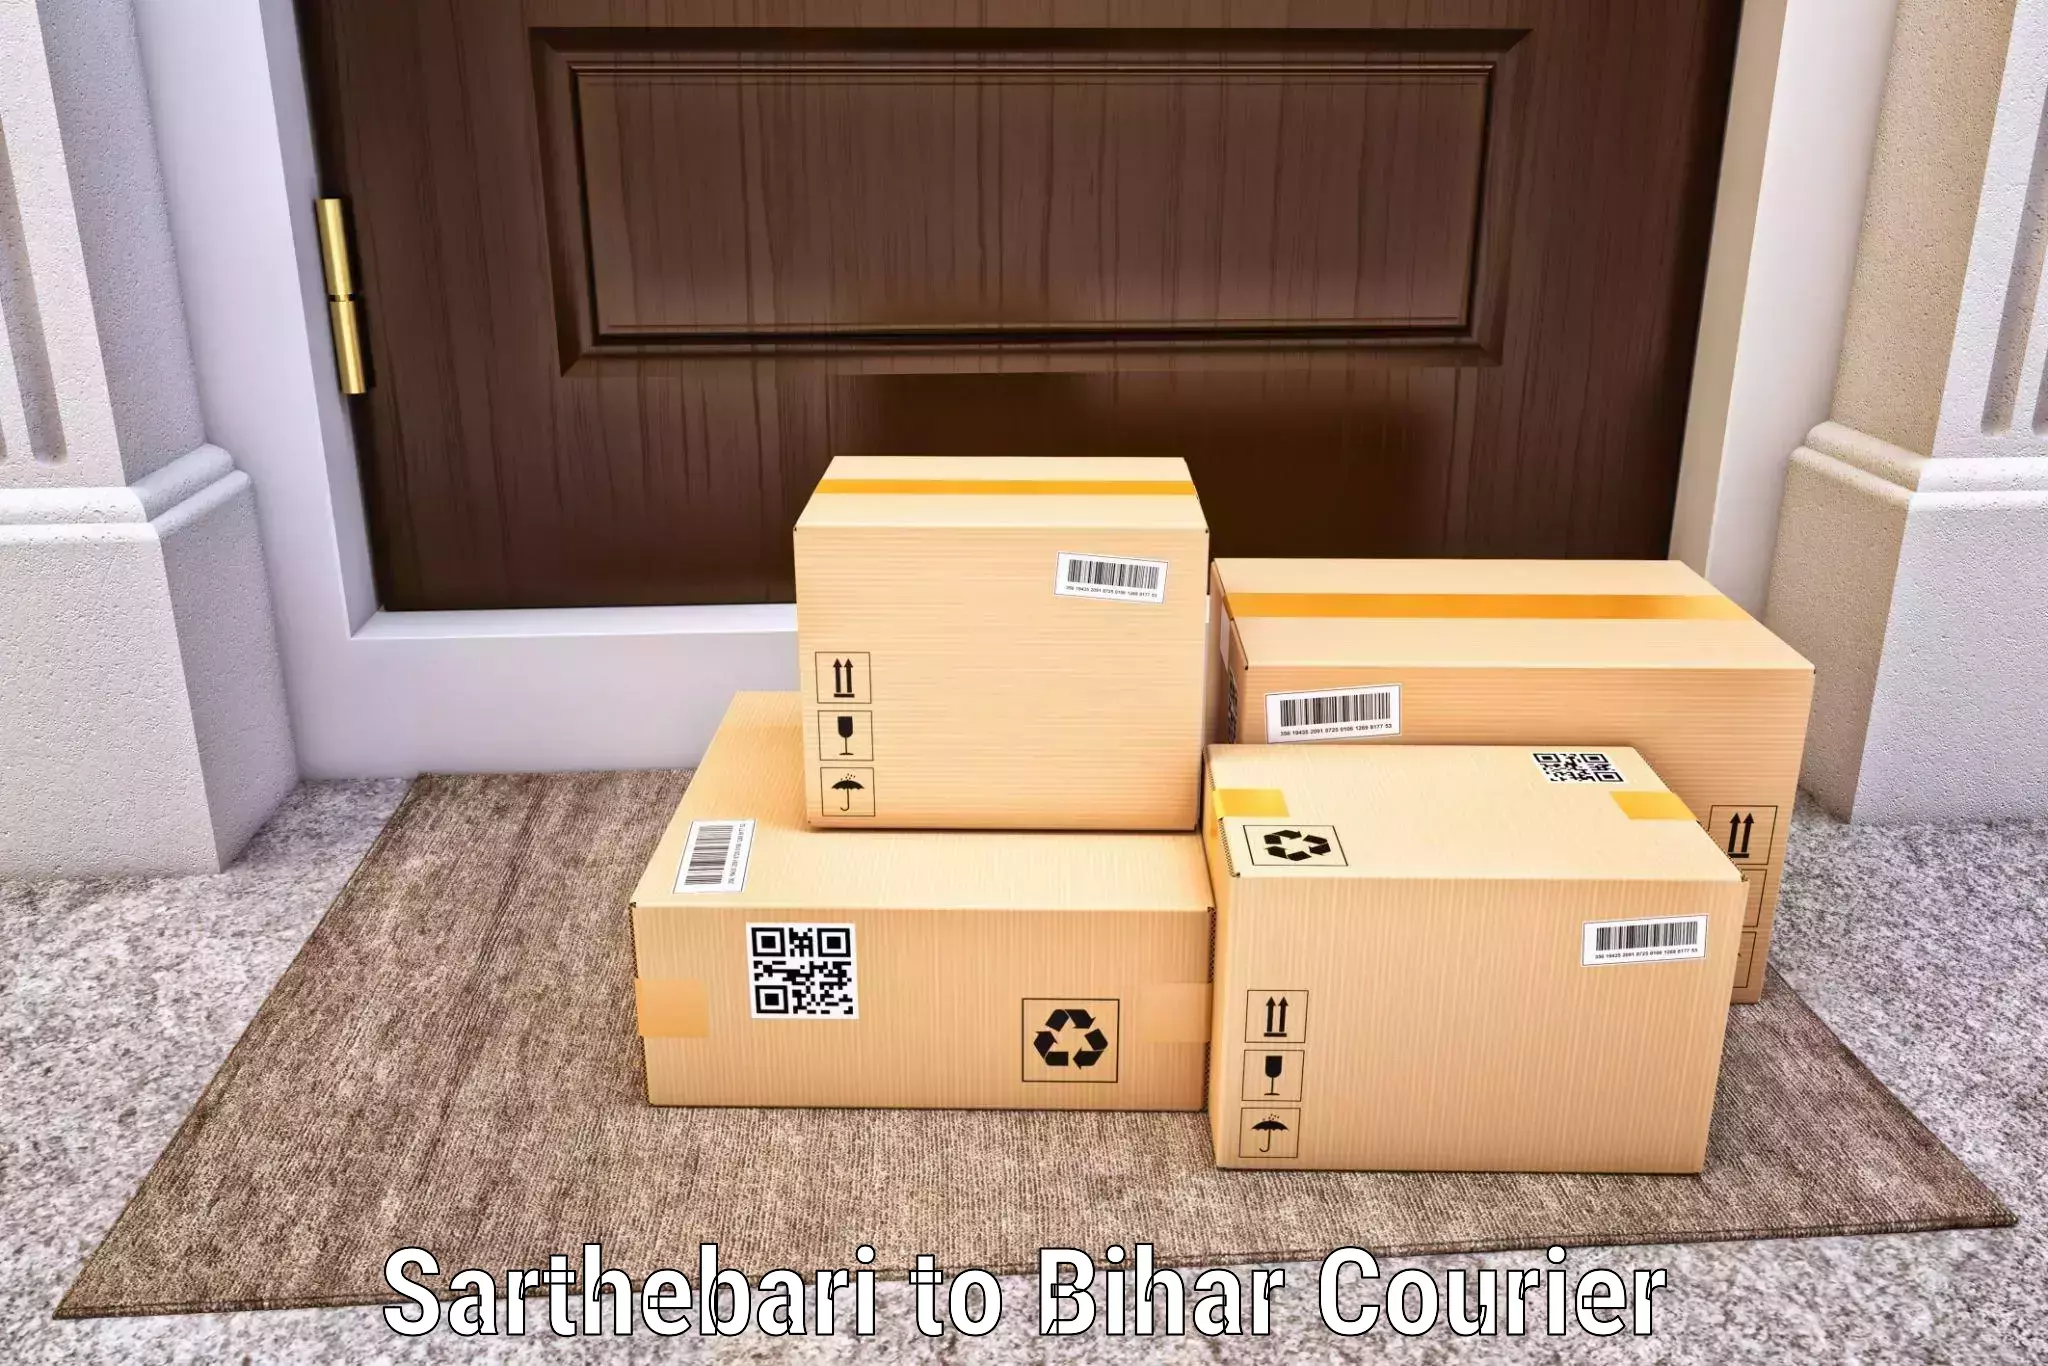 Secure package delivery Sarthebari to Vaishali